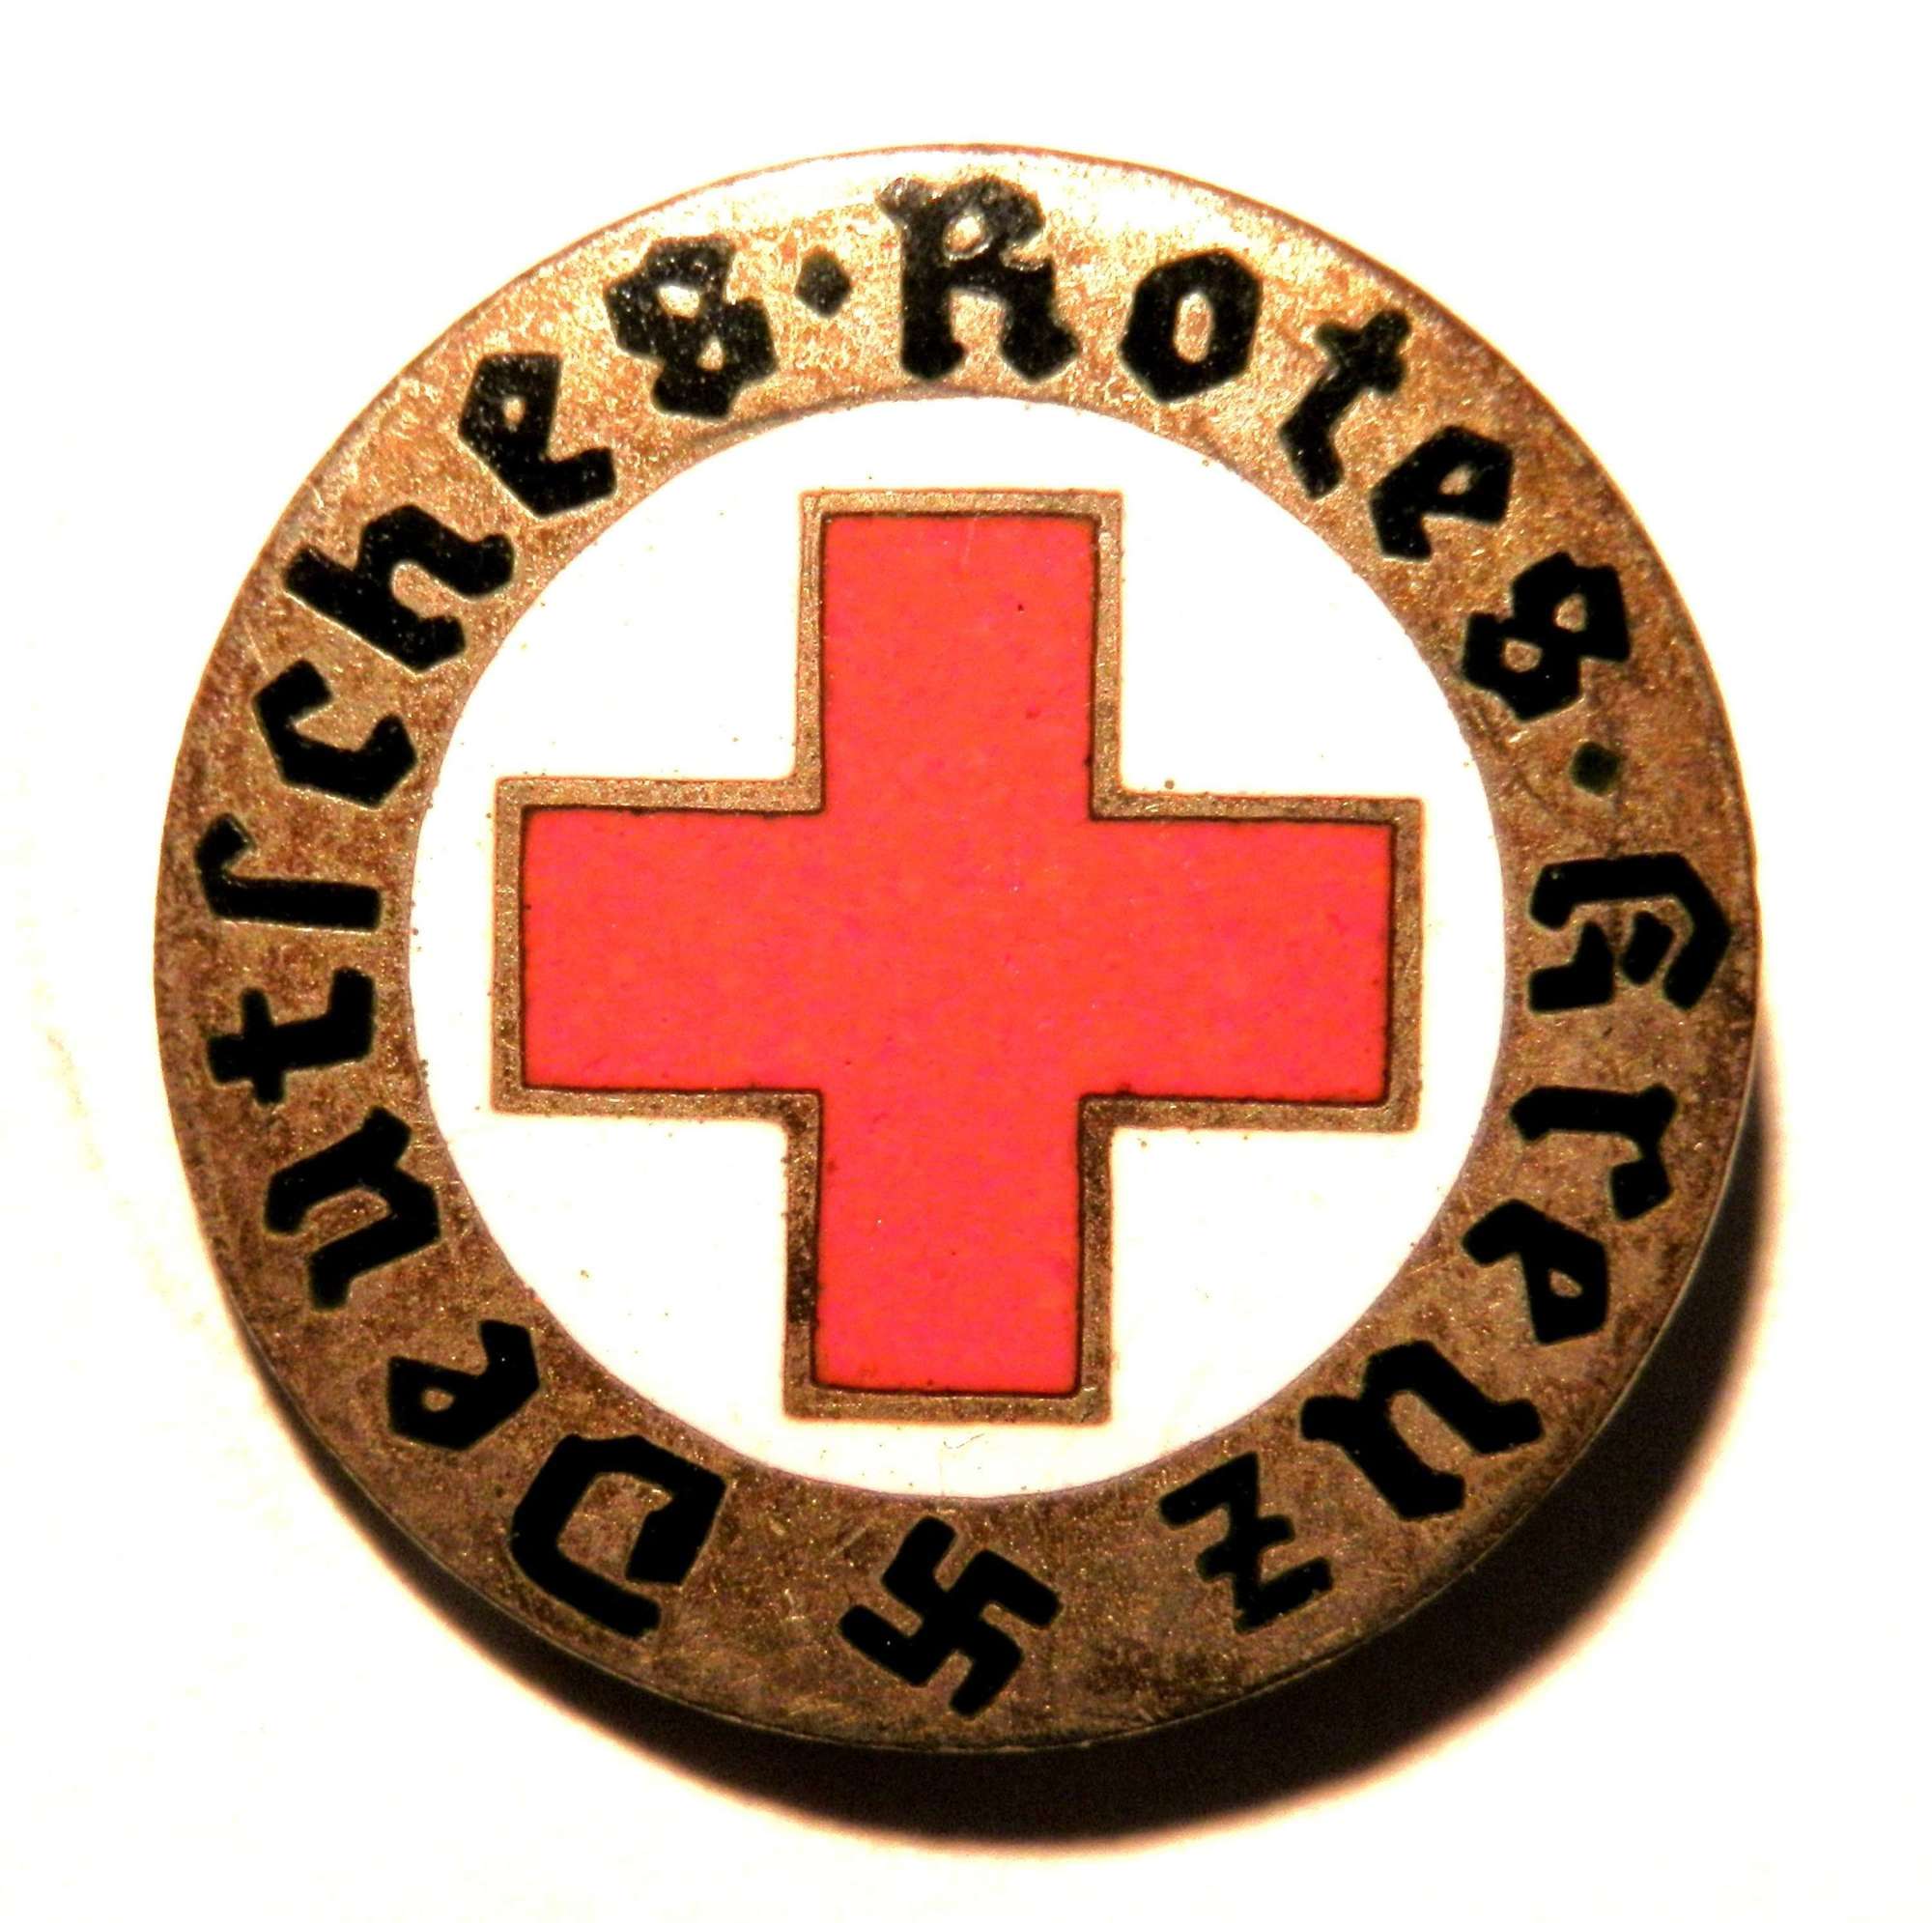 Deutsches Rotes Kreuz (DRK) Lapel Pin.